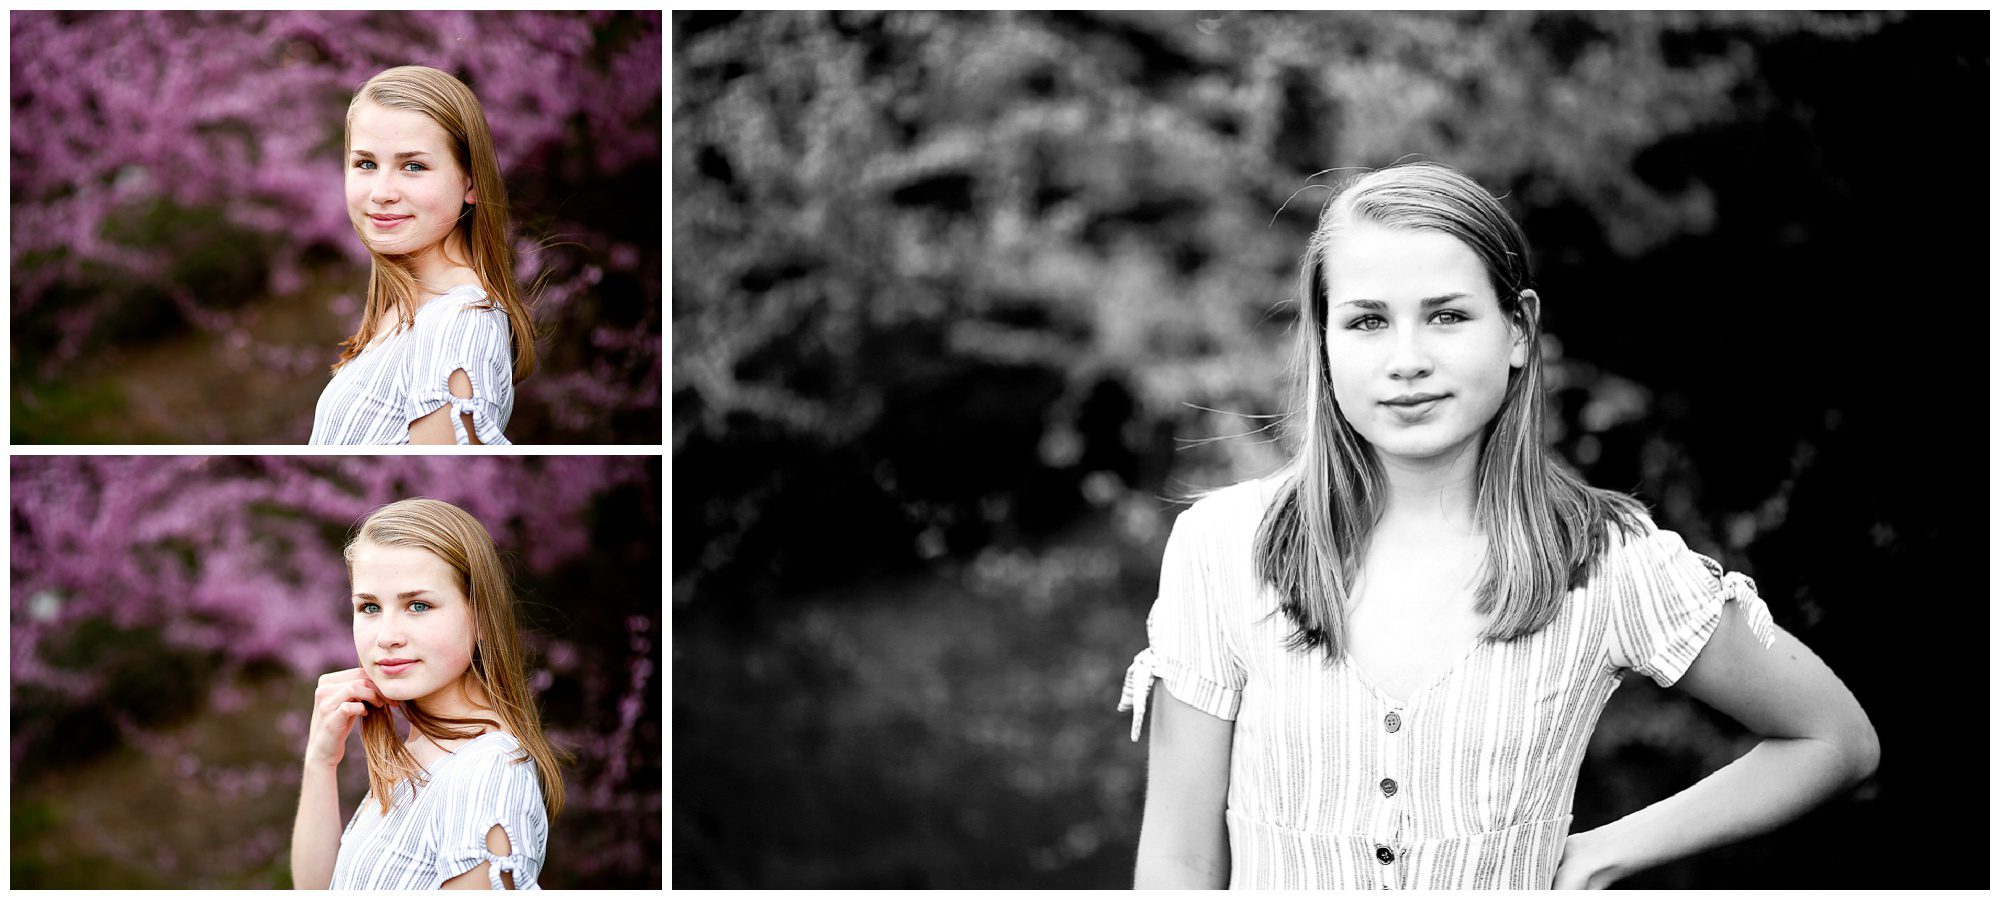 Lake Monticello Teenage Girl Spring Portraits Fluvanna Photographer Coronacation Pictures springtime photoshoot session 2020 senior high school break